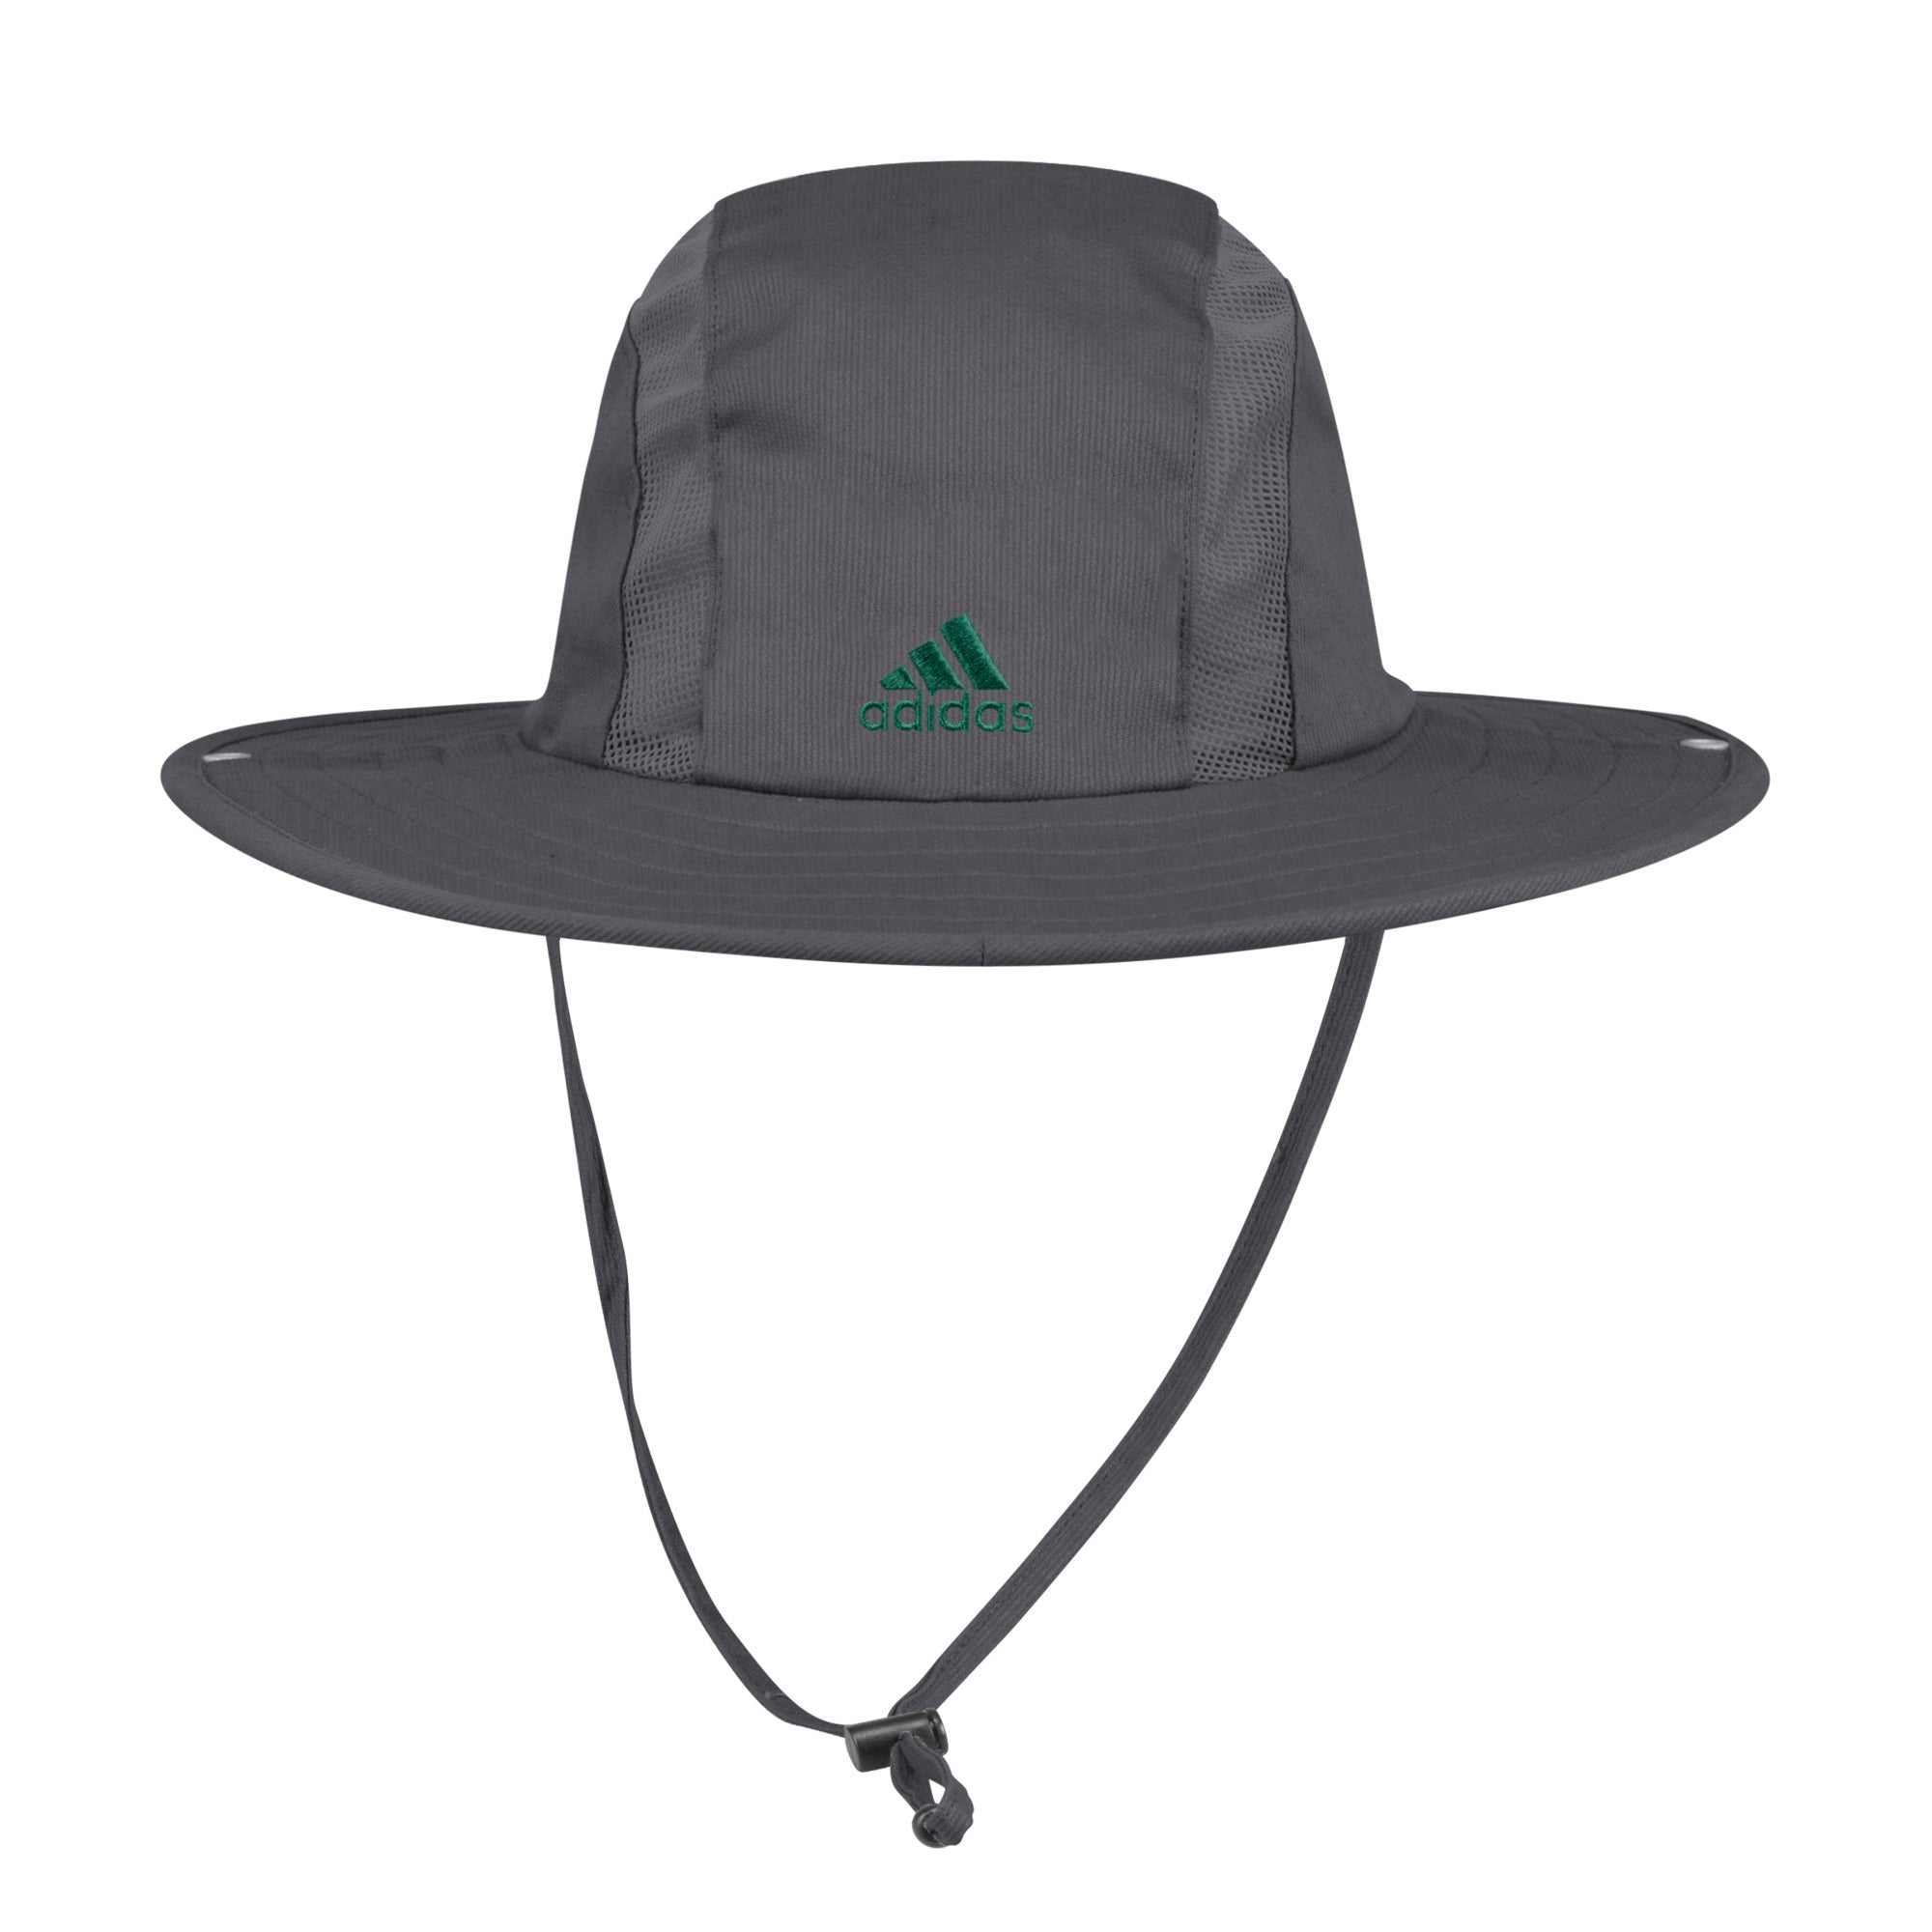 Miami Hurricanes adidas 2019 Safari Hat - Grey